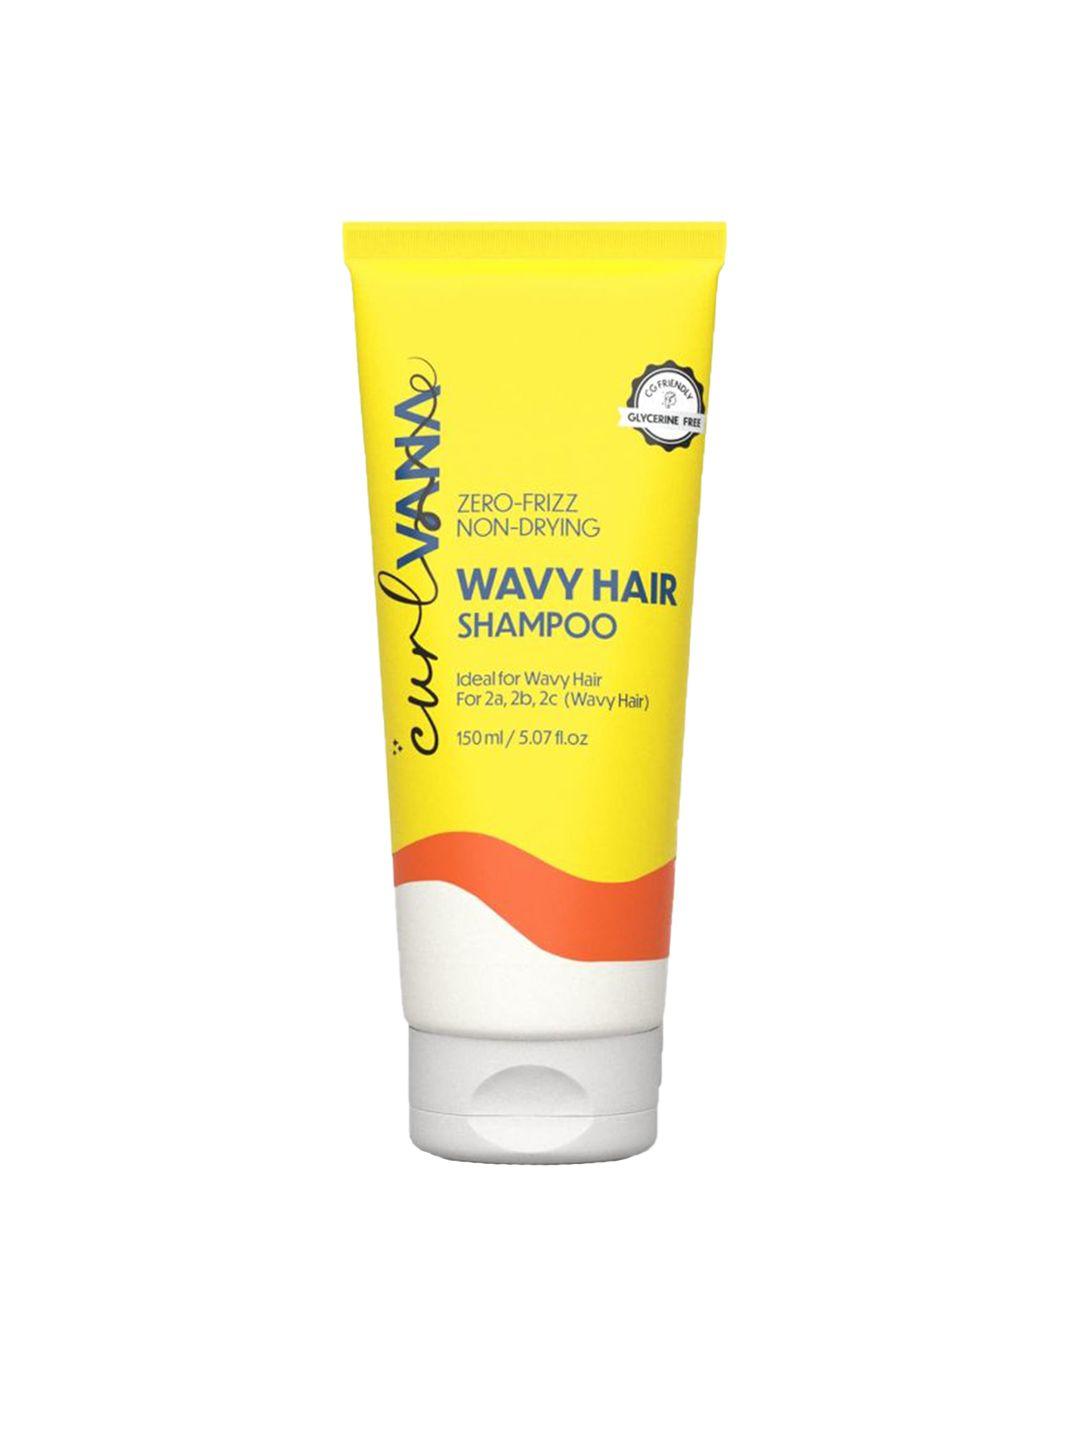 curlvana zero-frizz glycerine free non drying wavy hair shampoo - 150ml